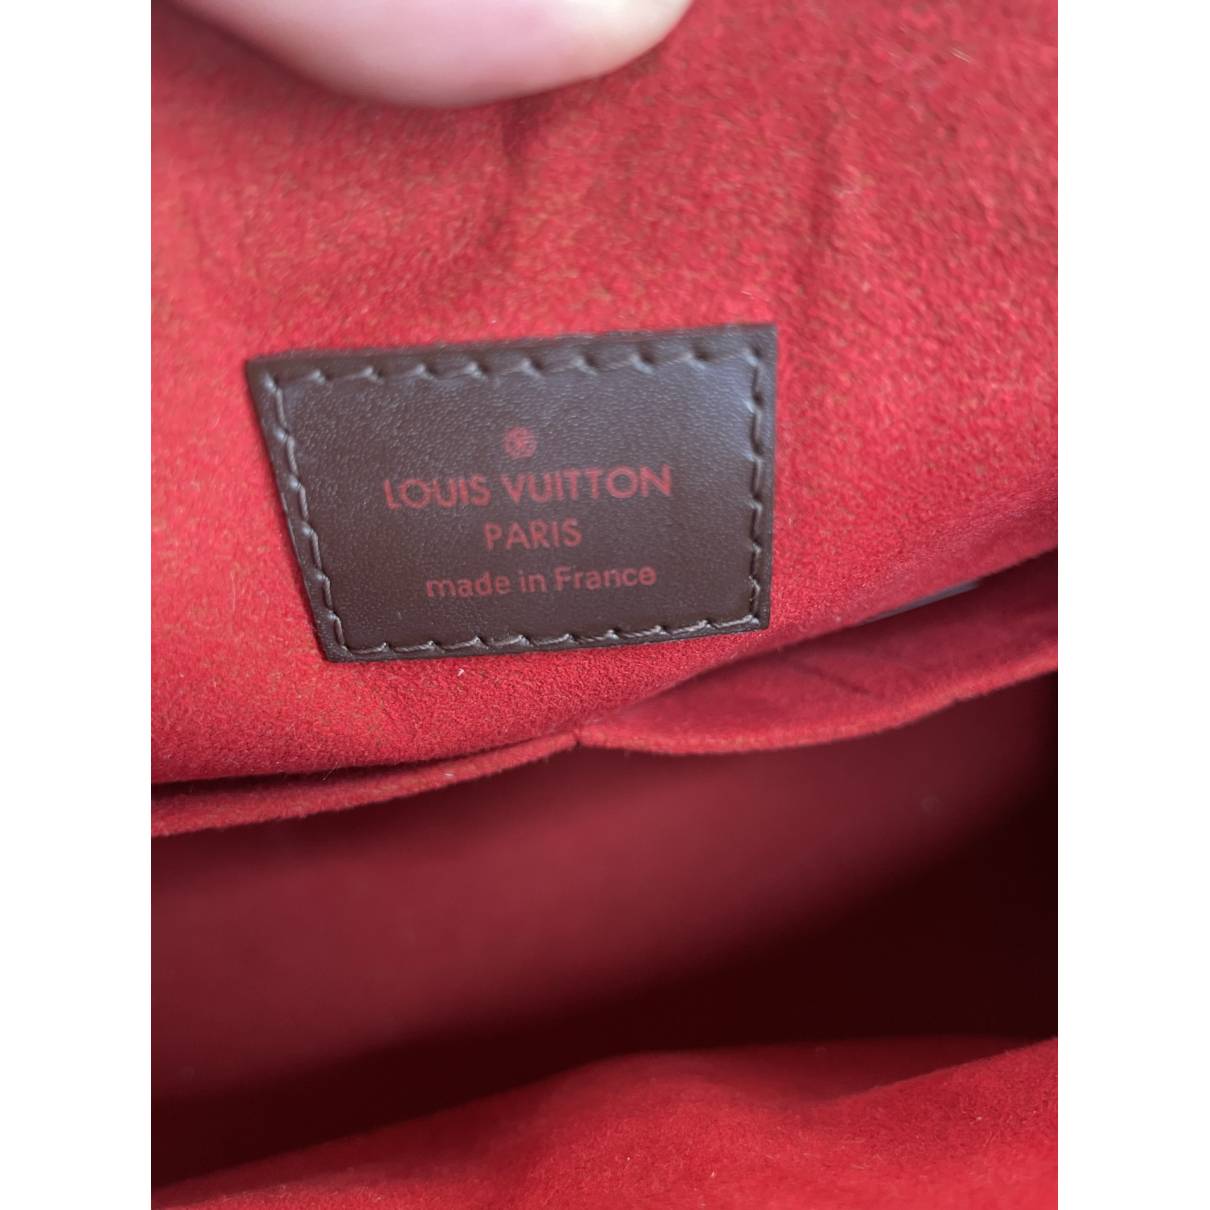 Buy Louis Vuitton Trevi leather handbag online